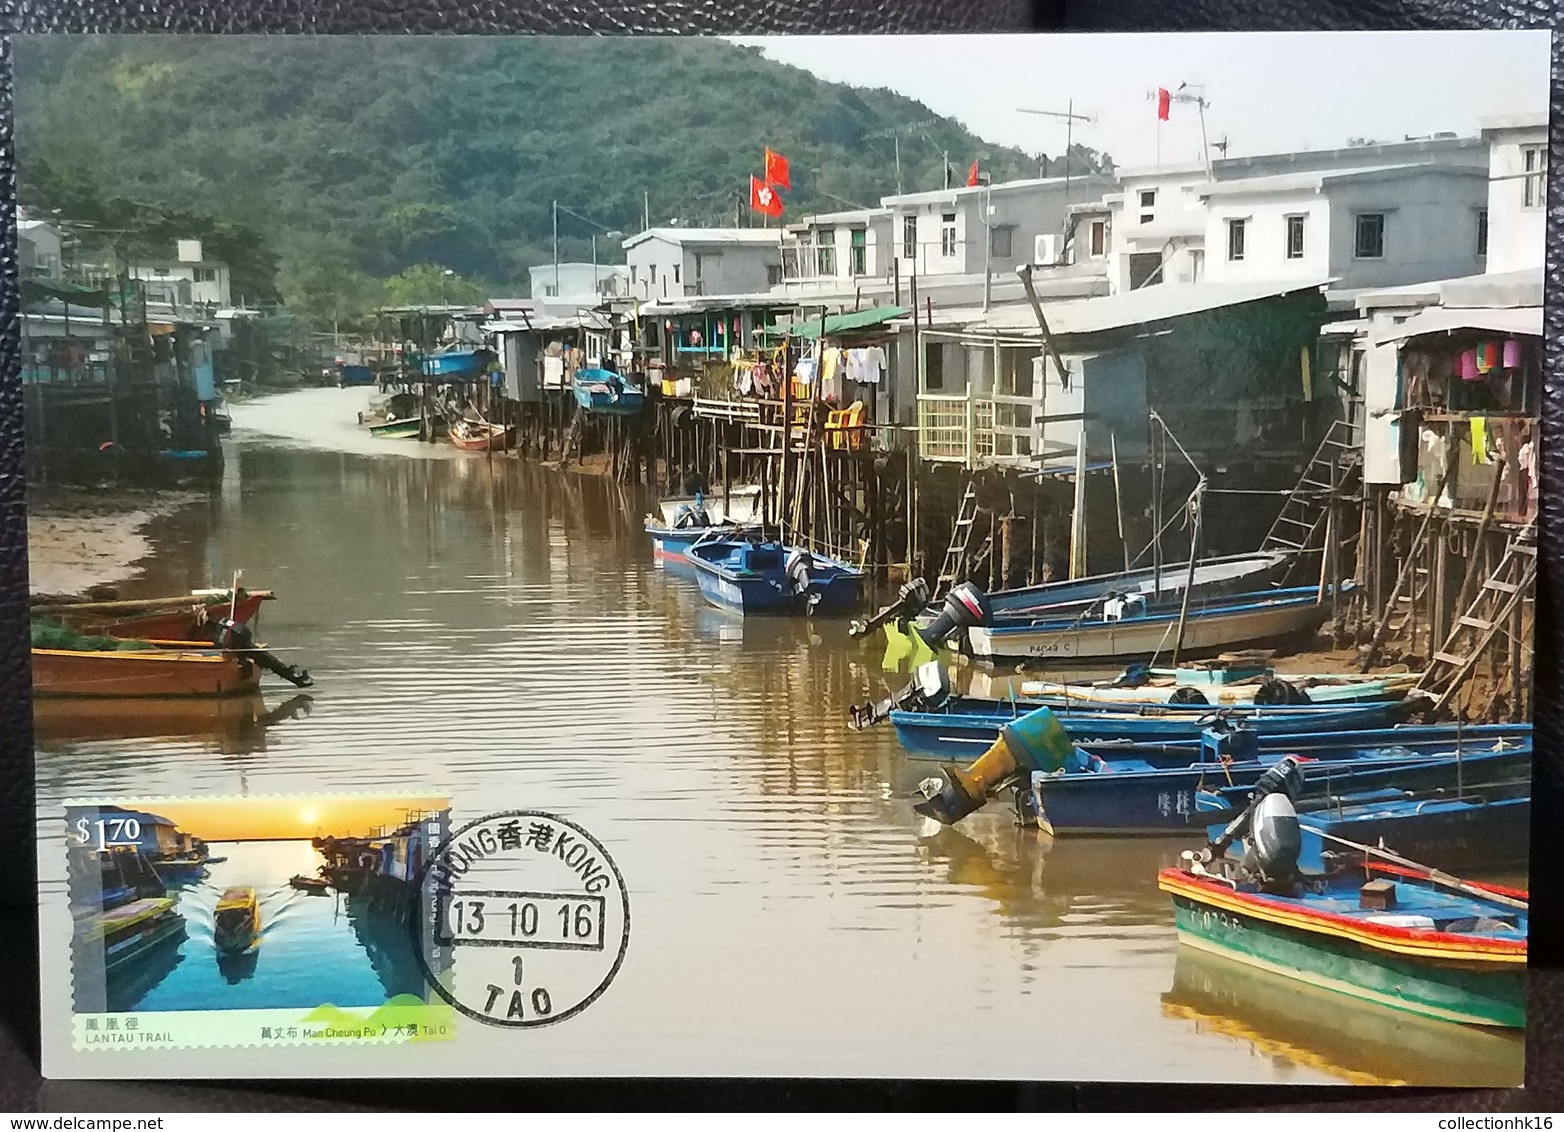 HK Hiking Trails Series No. 1: Lantau Trail Tai O Fishing Village 2016 Hong Kong Maximum Card MC (Location Postmark) 5 - Maximumkaarten